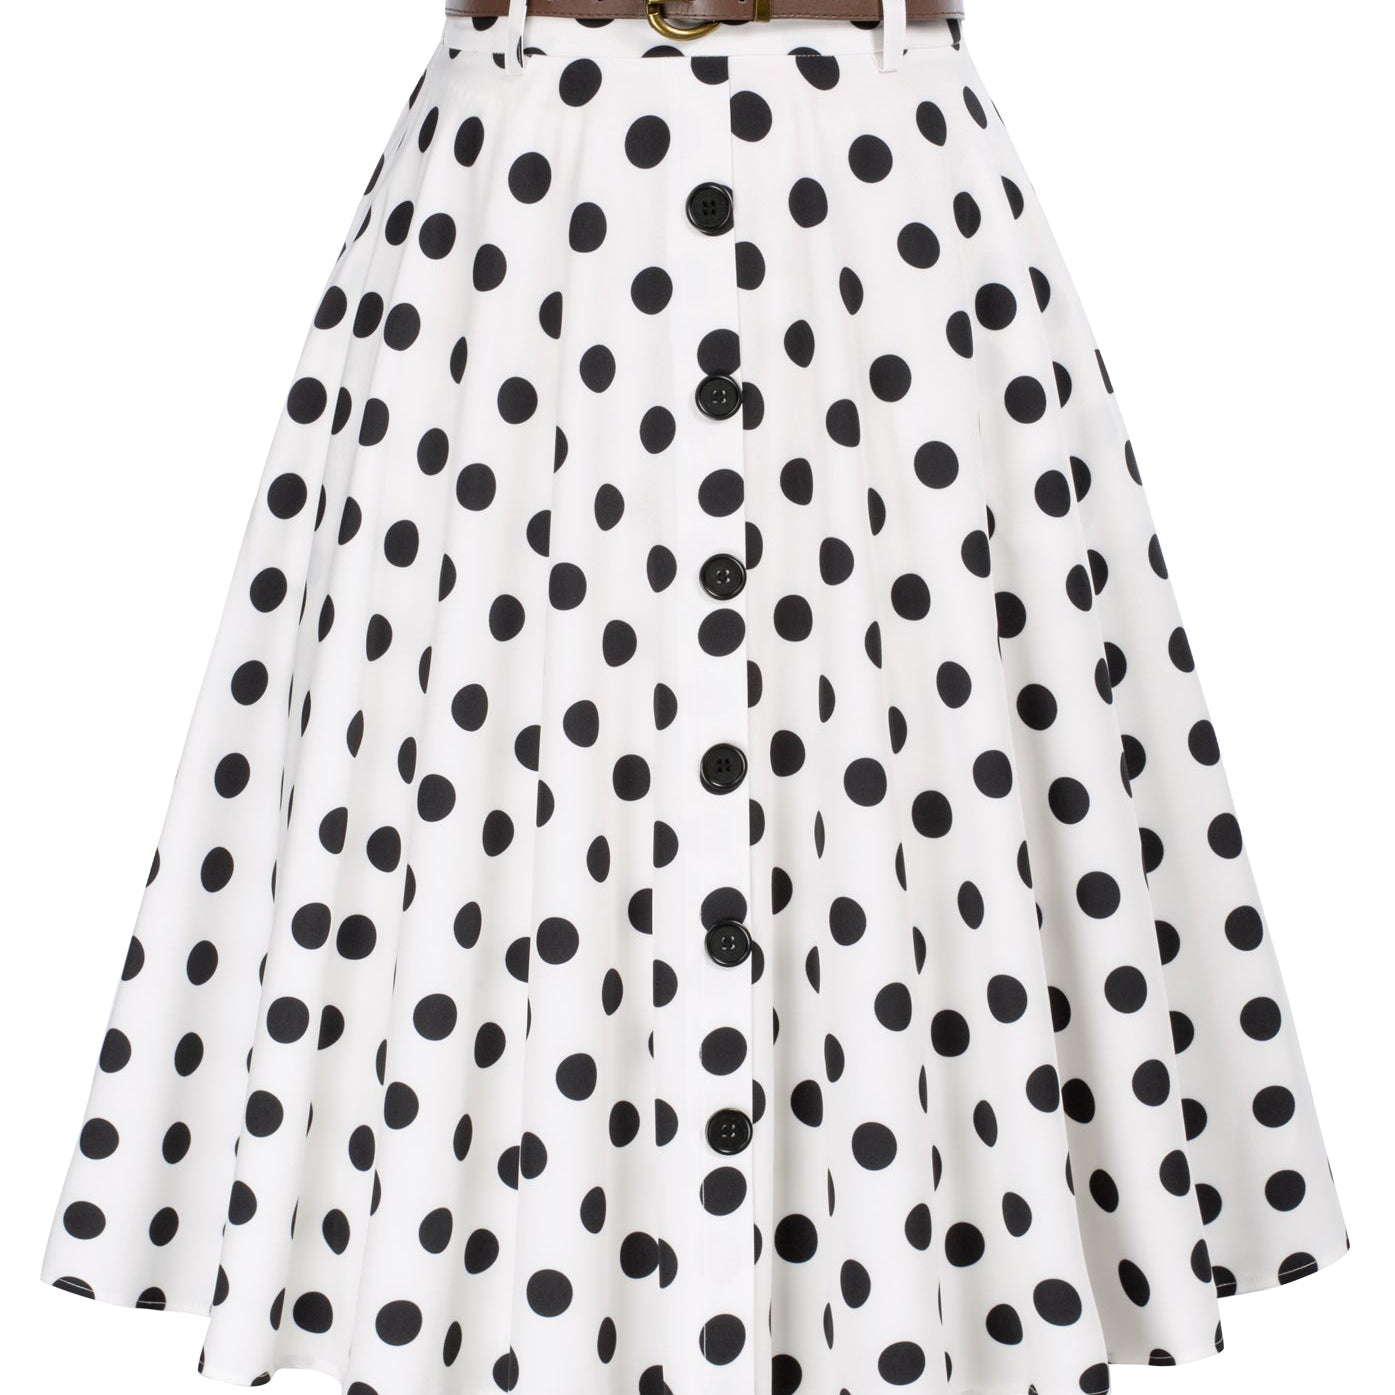 Polka Dots Swing Skirt with Belt Elastic High Waist Buttons Decorated Skirt